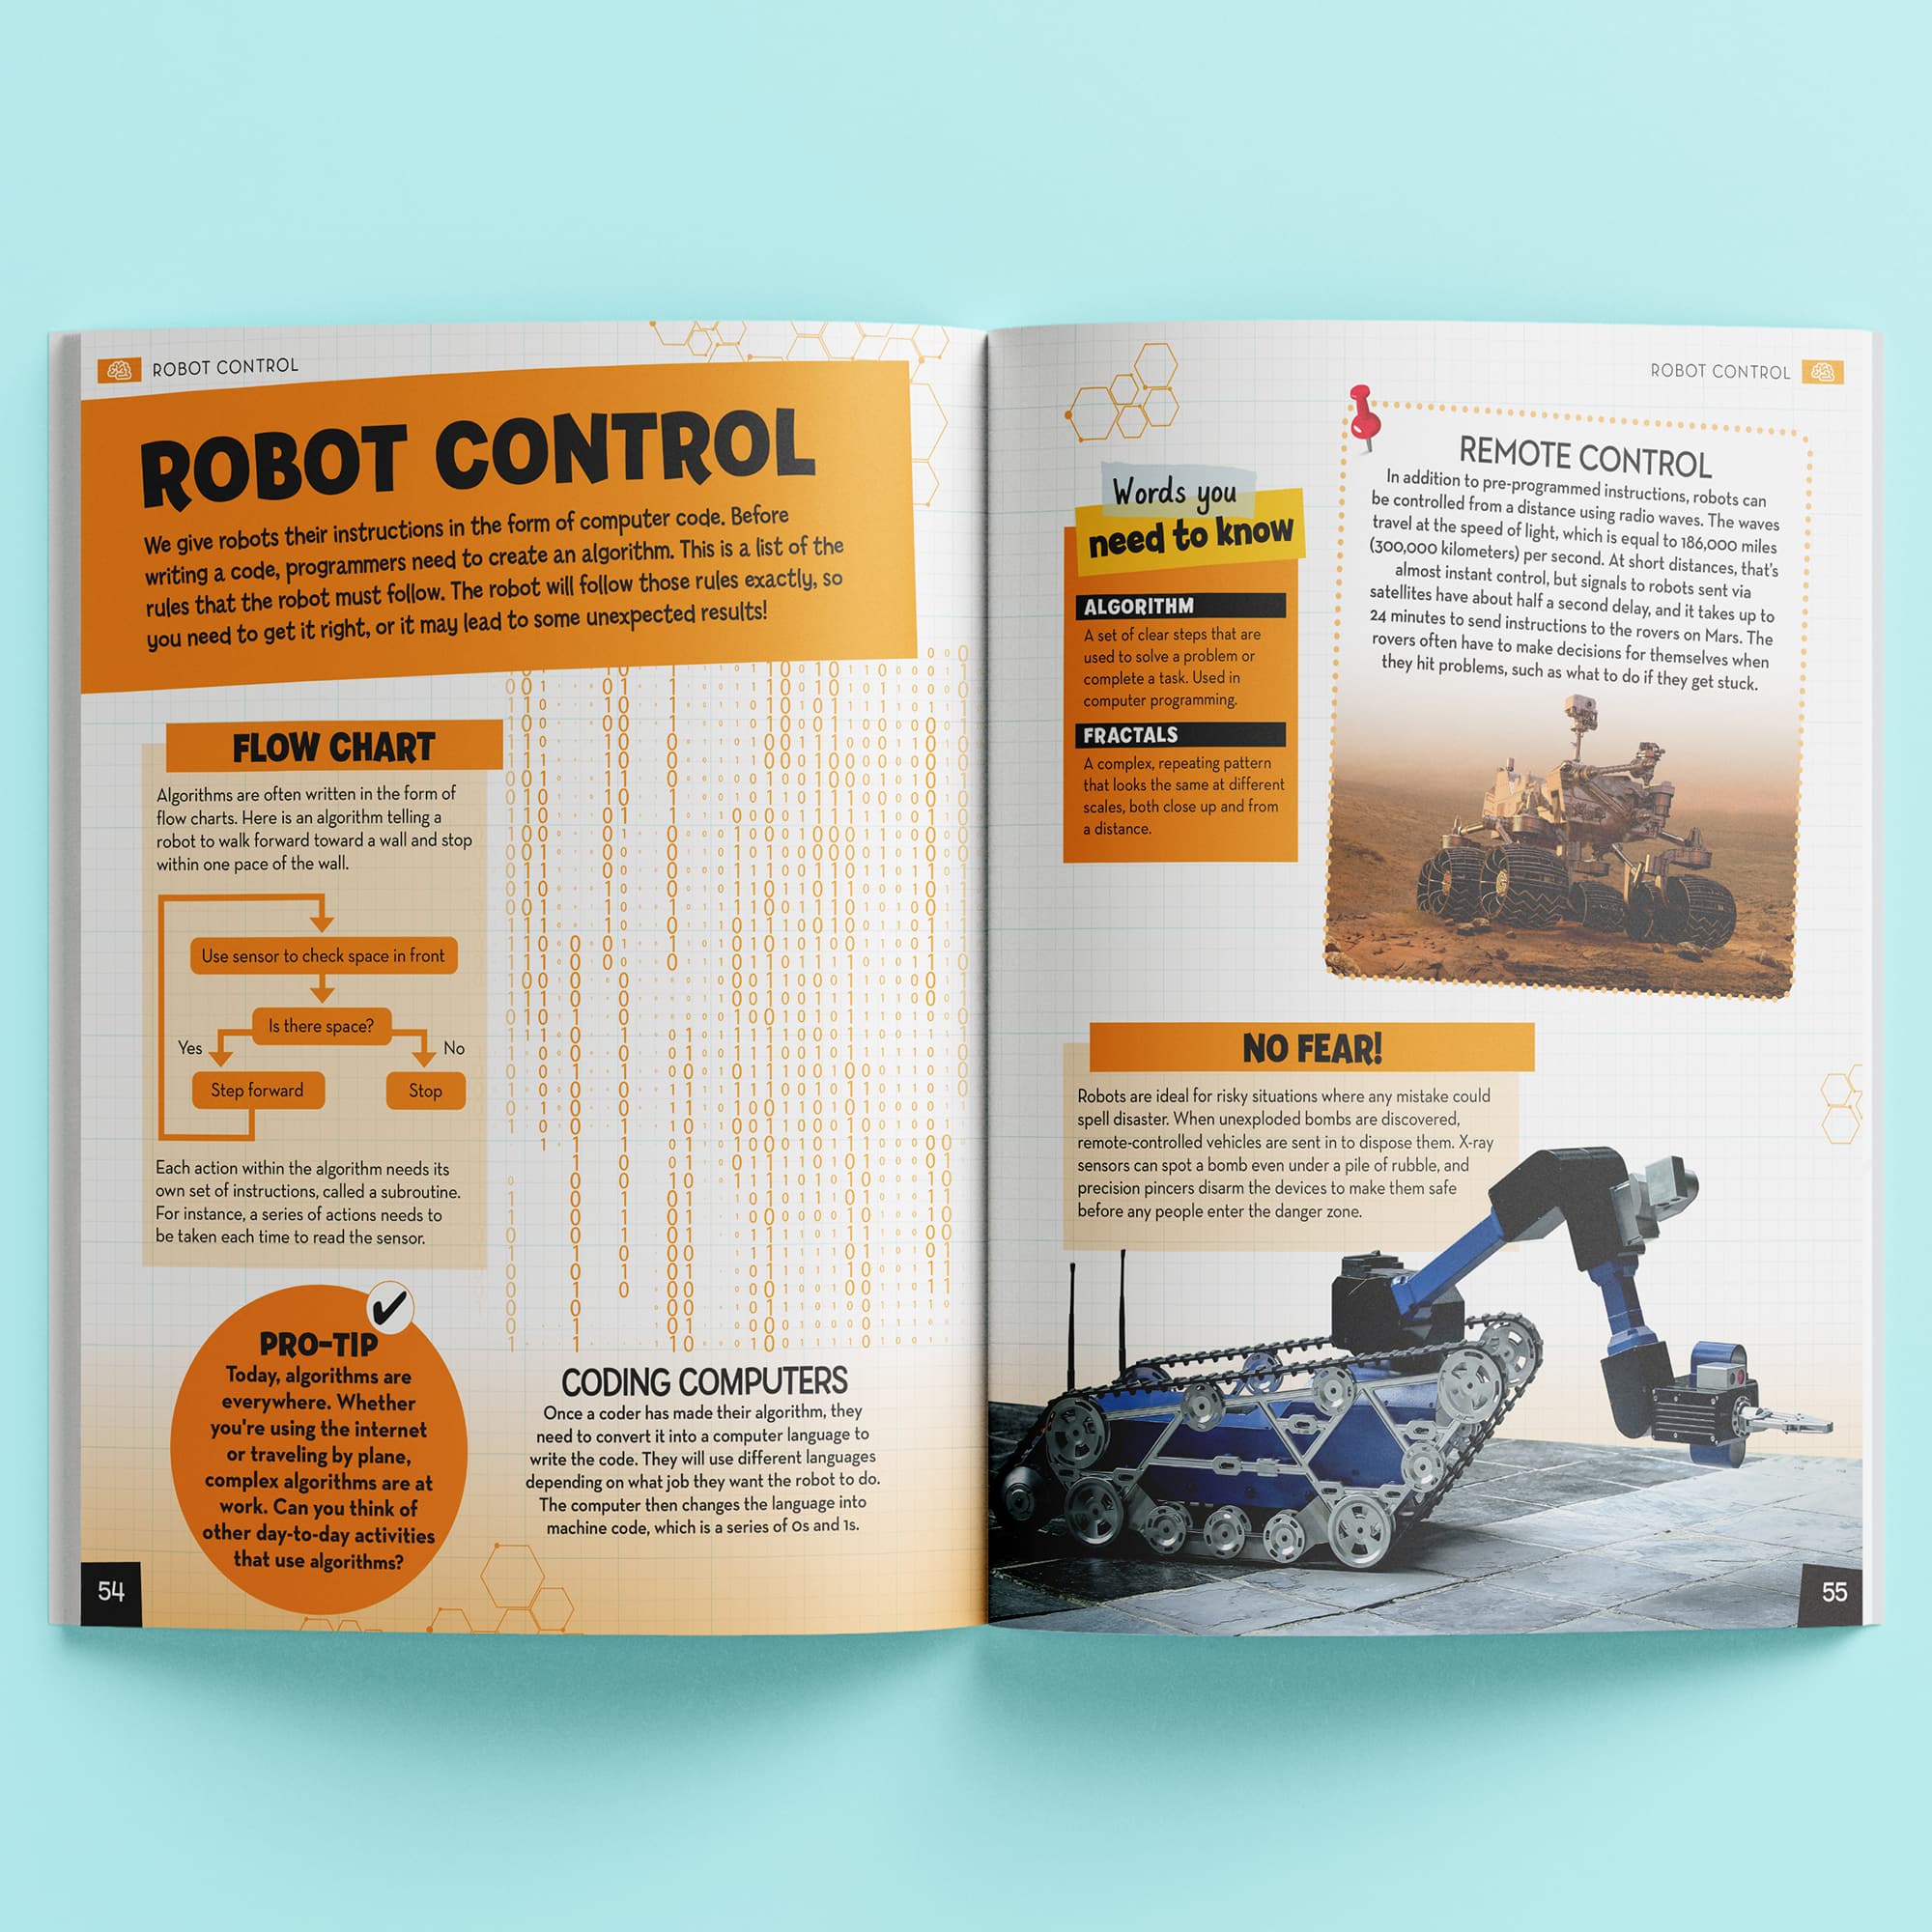 Hinkler Curious Universe&#x2122; Remarkable Robotics Book &#x26; Science Kit